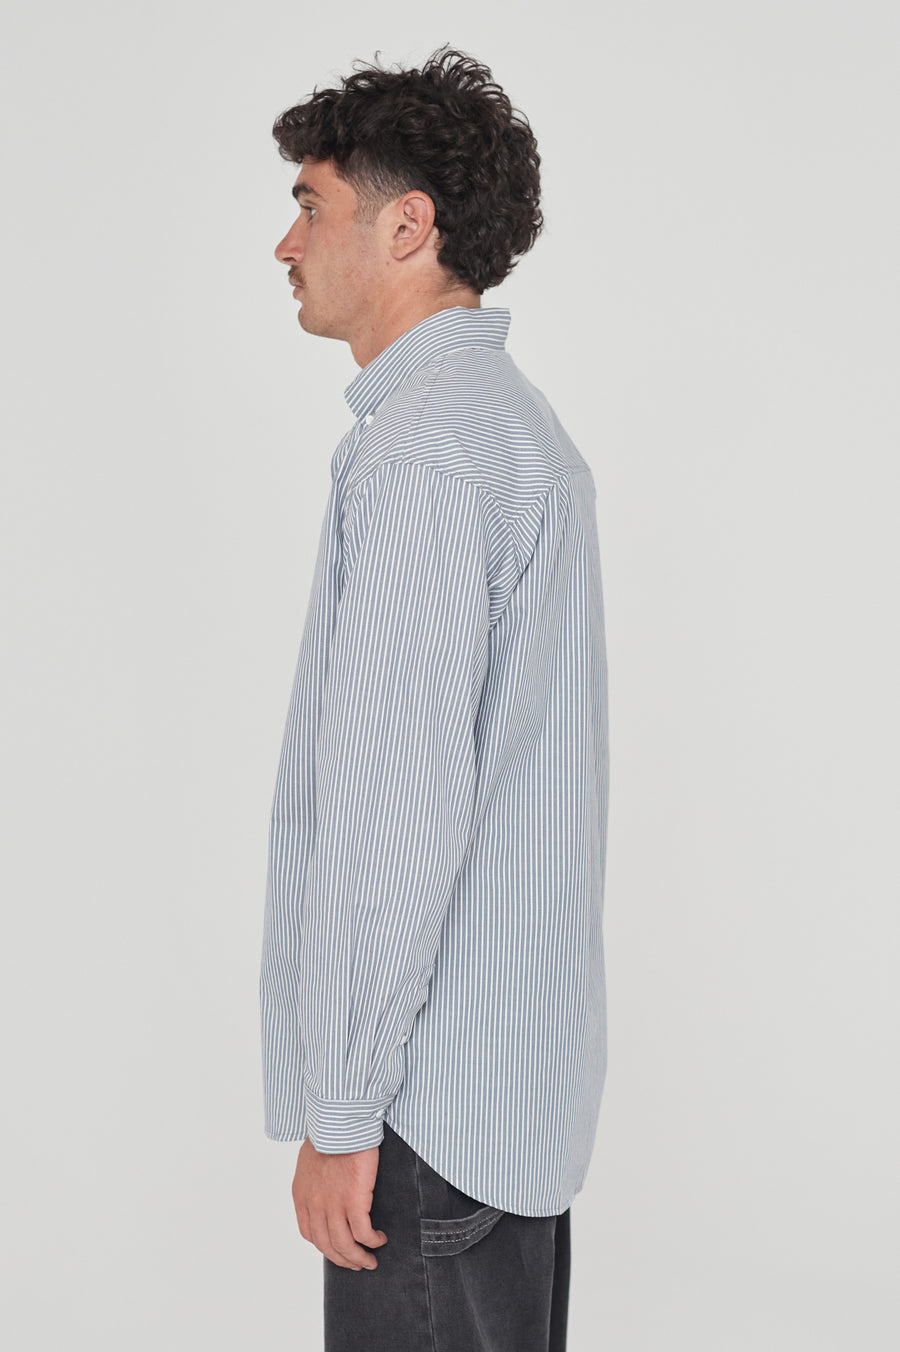 State Poplin Shirt - Slate Blue Stripe - Final Sale